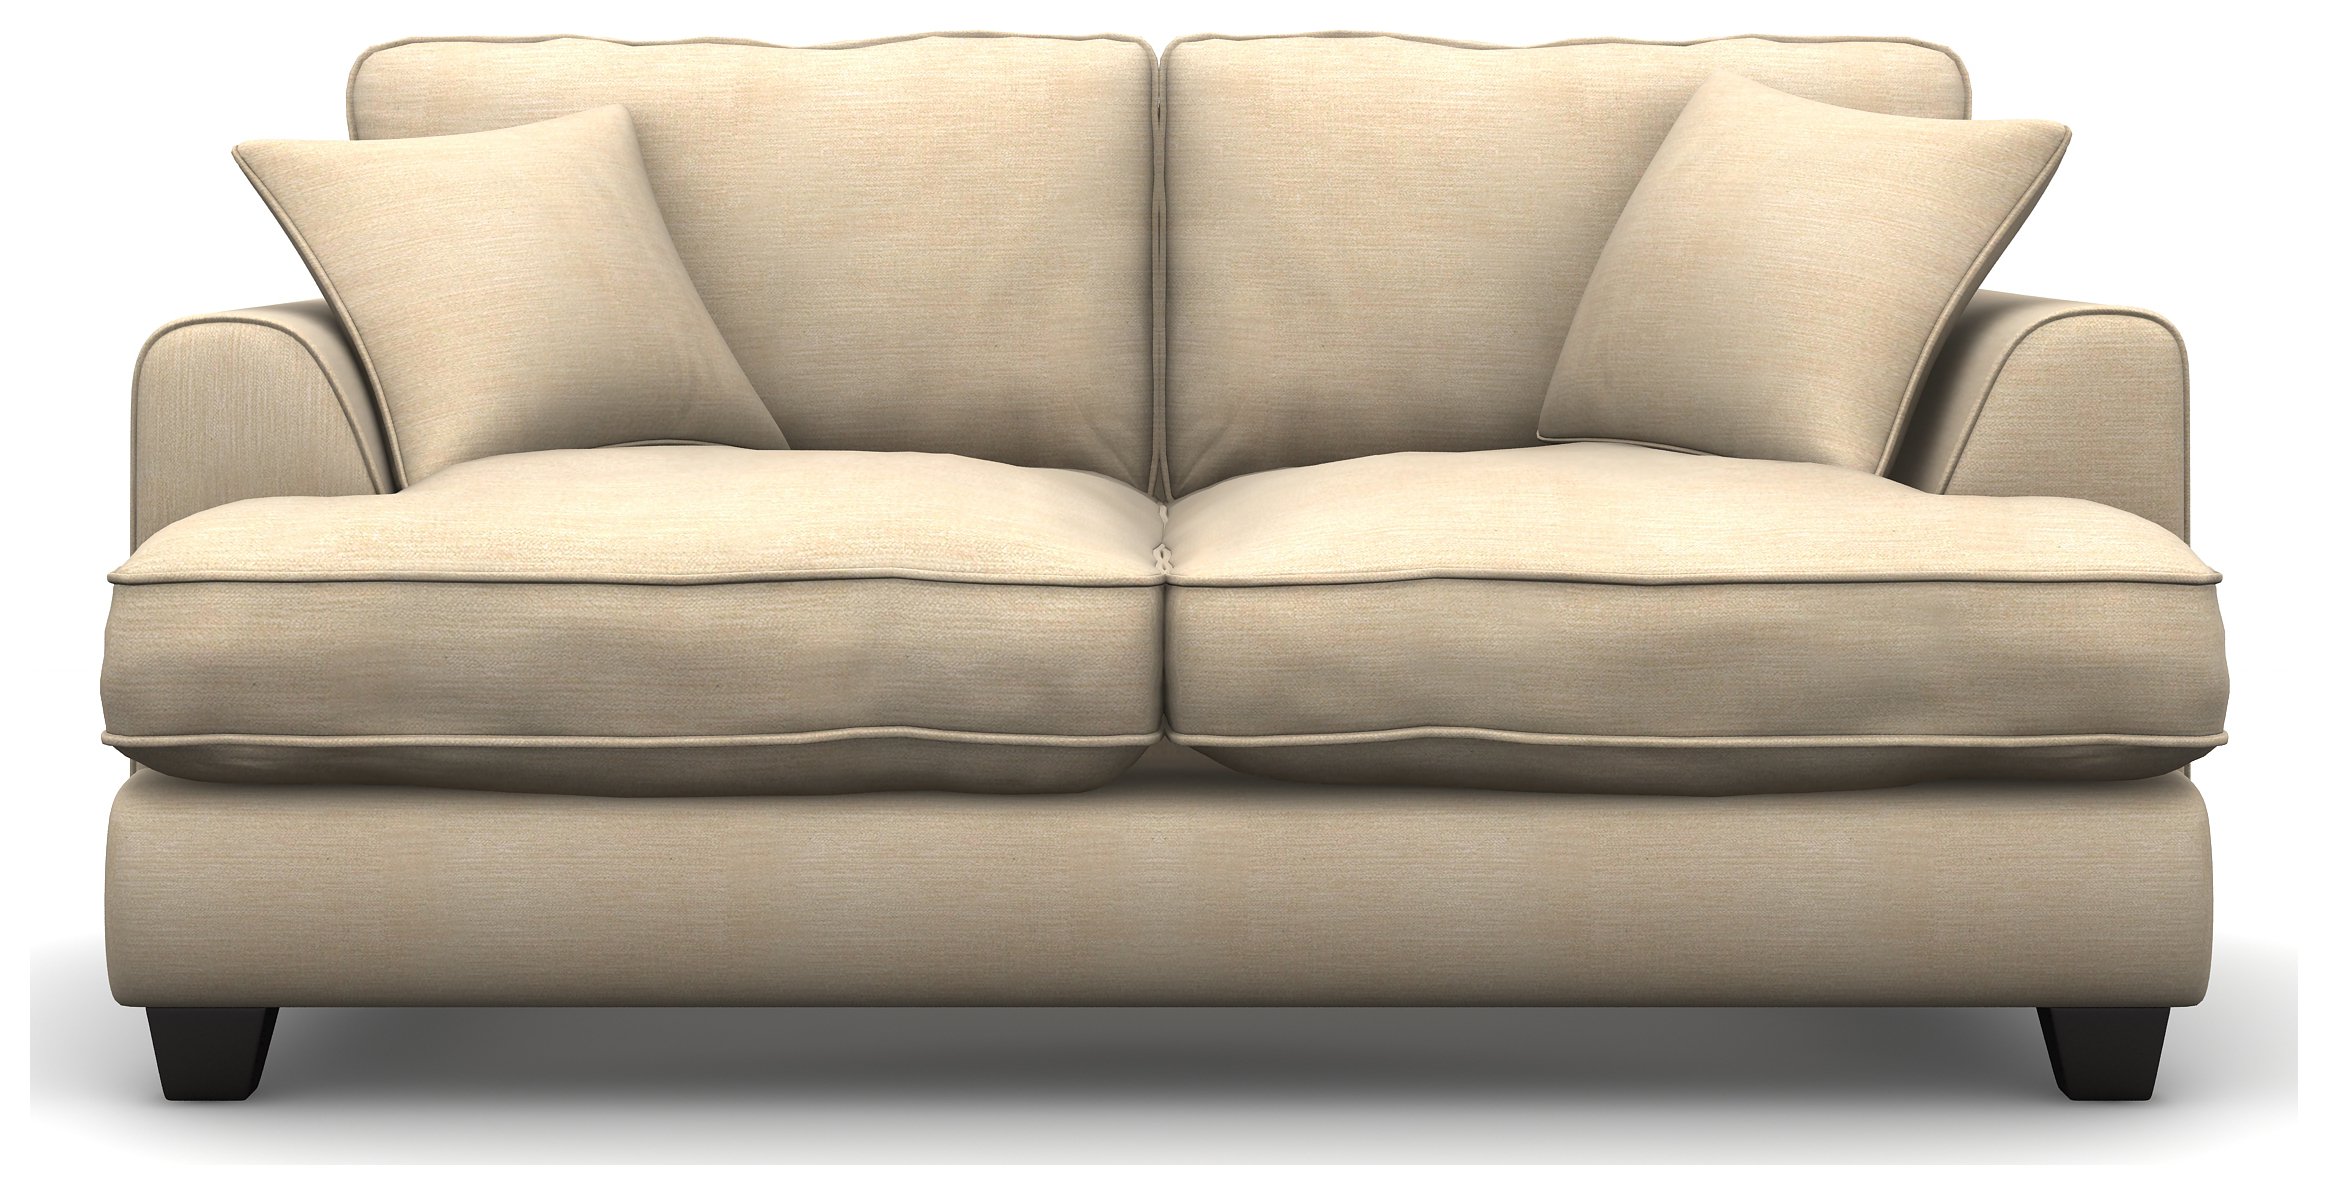 Argos Home Hampstead 2 Seater Fabric Sofa Bed - Beige